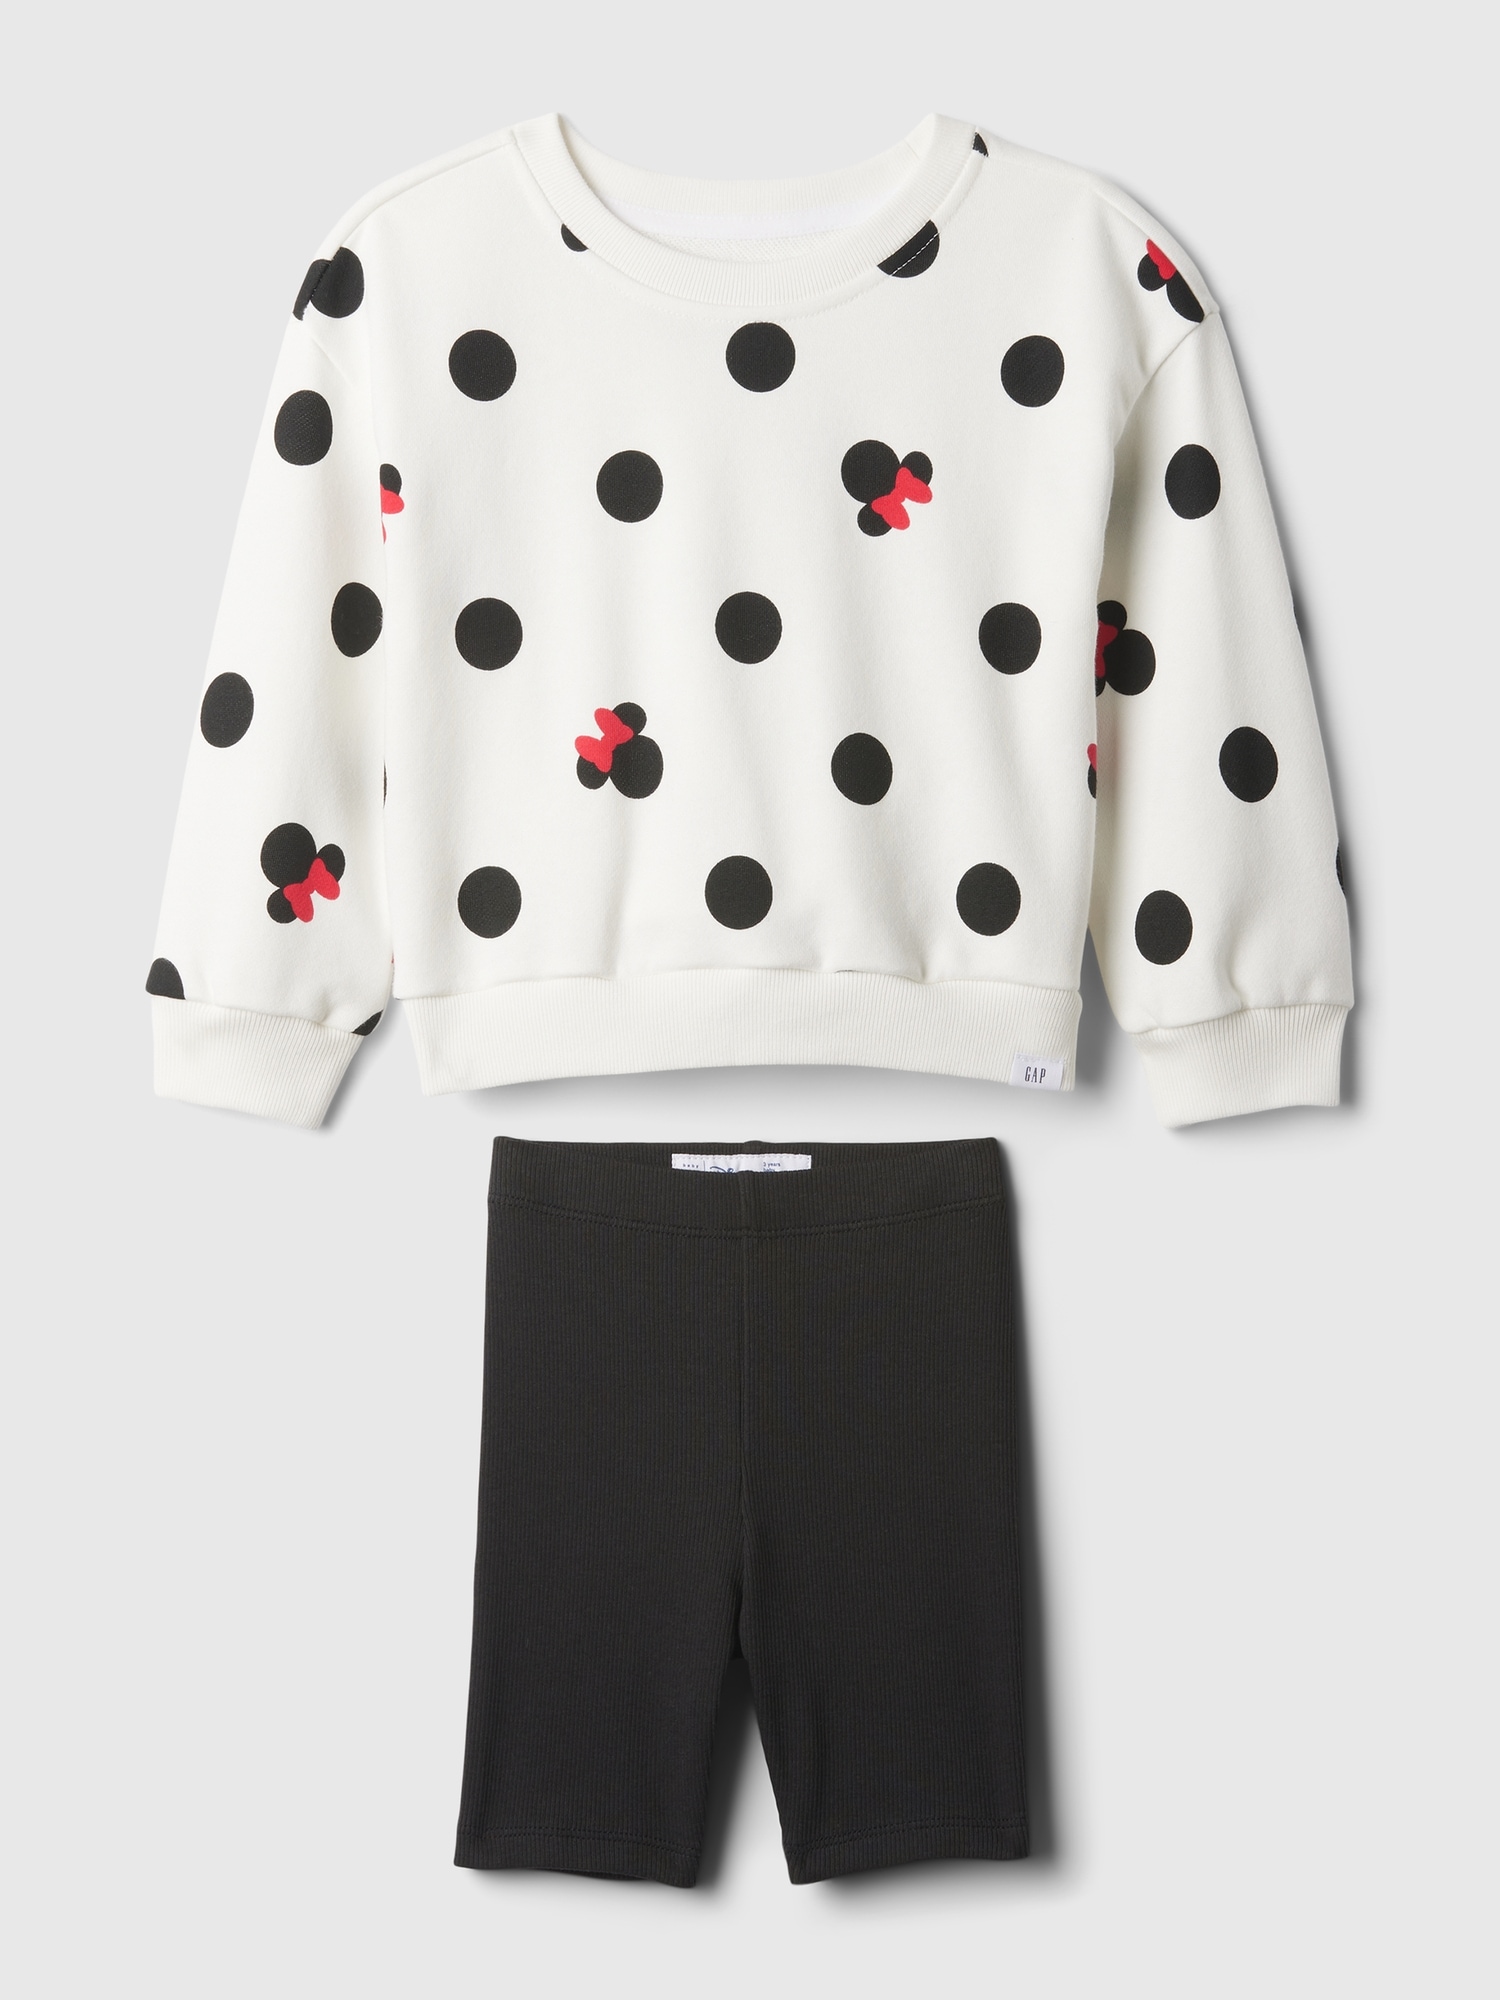 babyGap | Disney Minnie Mouse Outfit Set